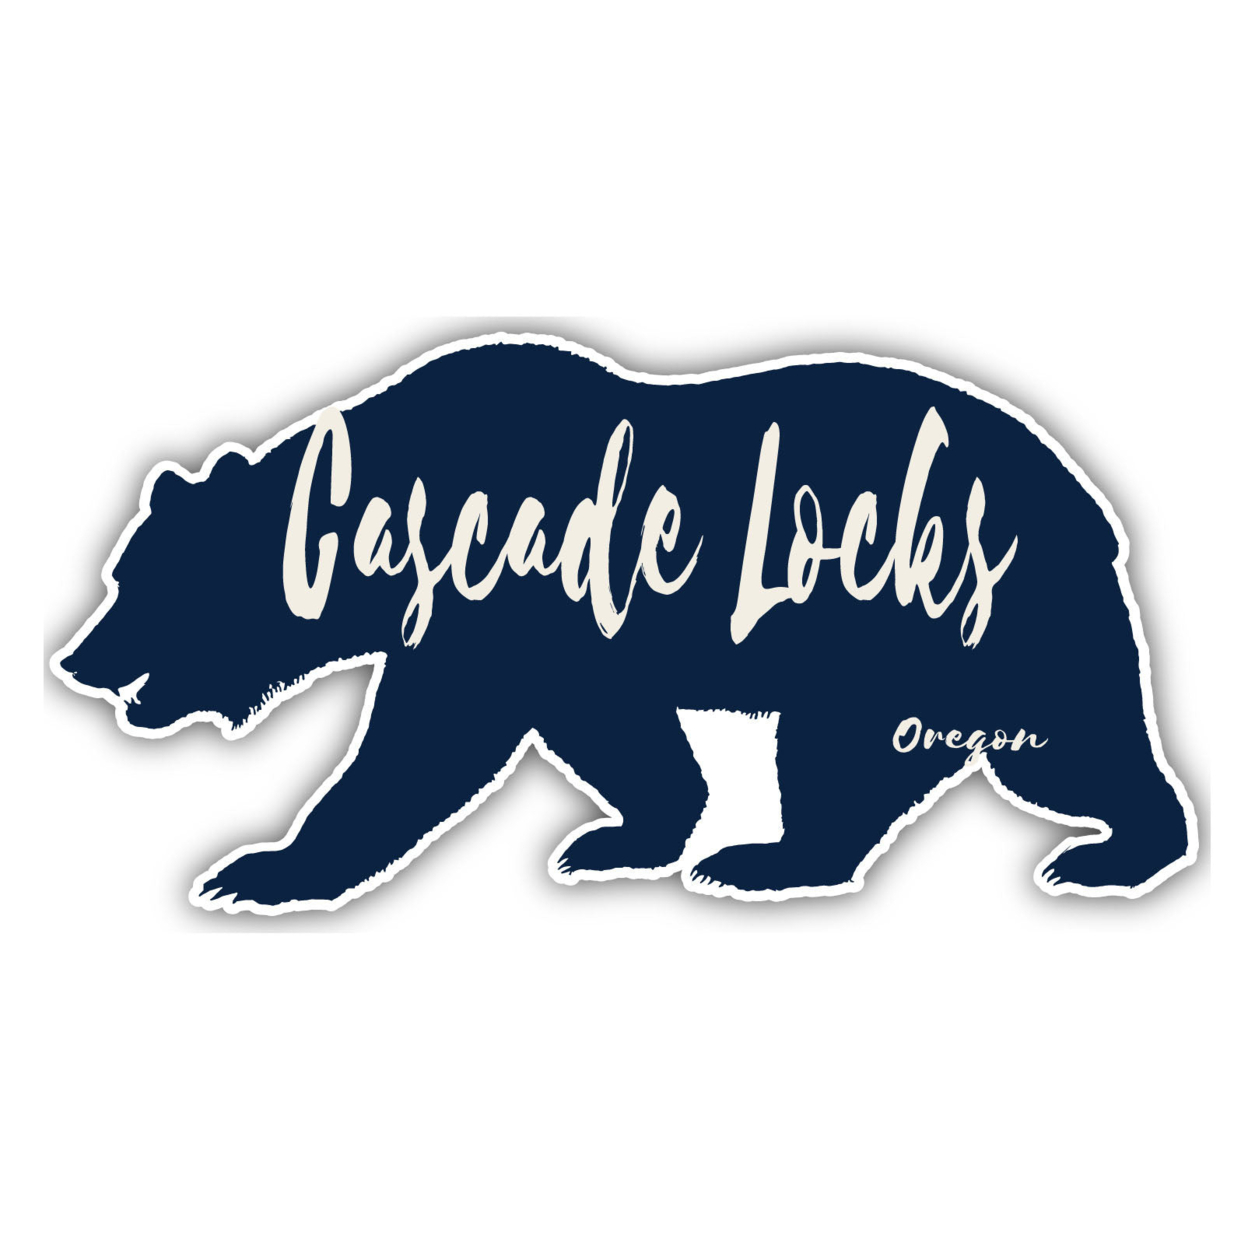 Cascade Locks Oregon Souvenir Decorative Stickers (Choose Theme And Size) - 4-Pack, 6-Inch, Bear